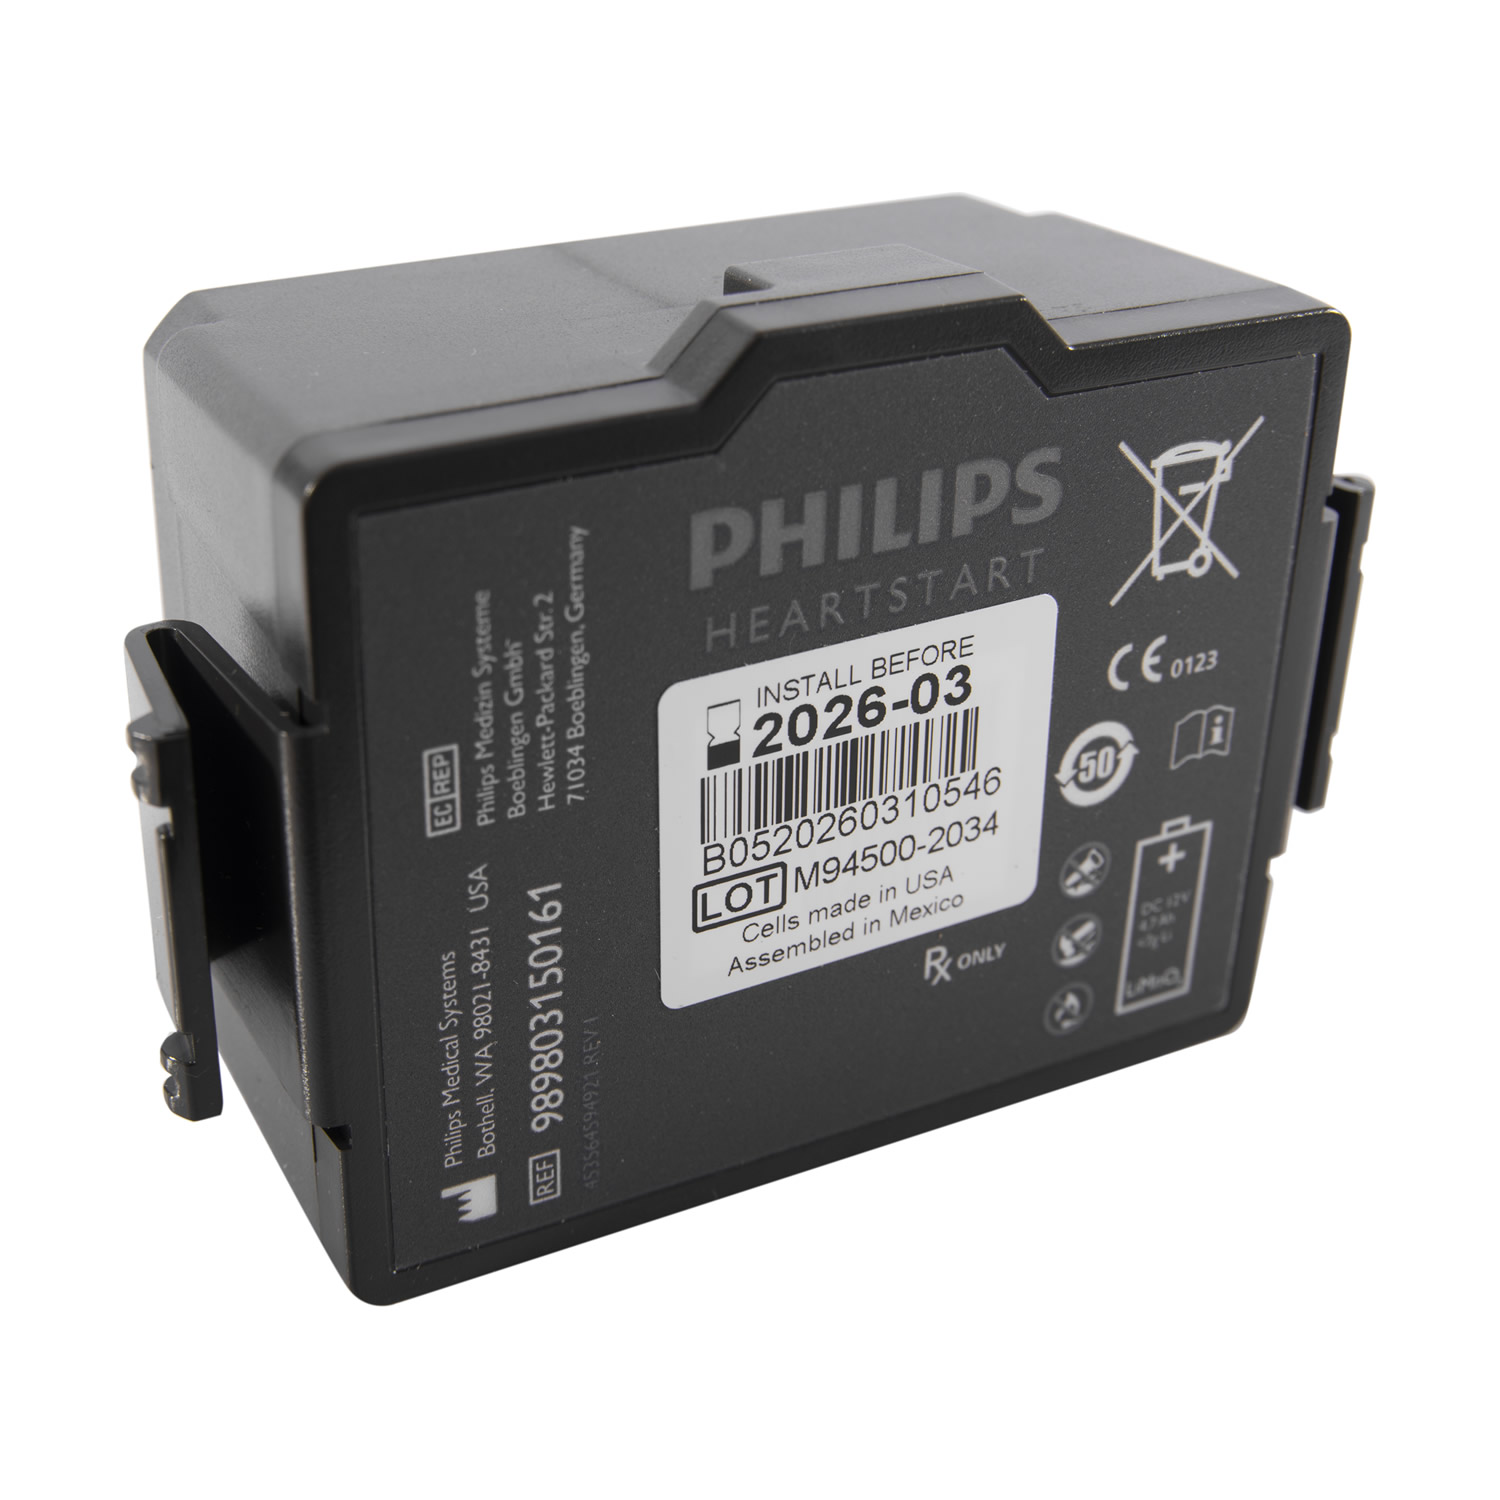 Philips HeartStart FR3 Defibrillator Battery